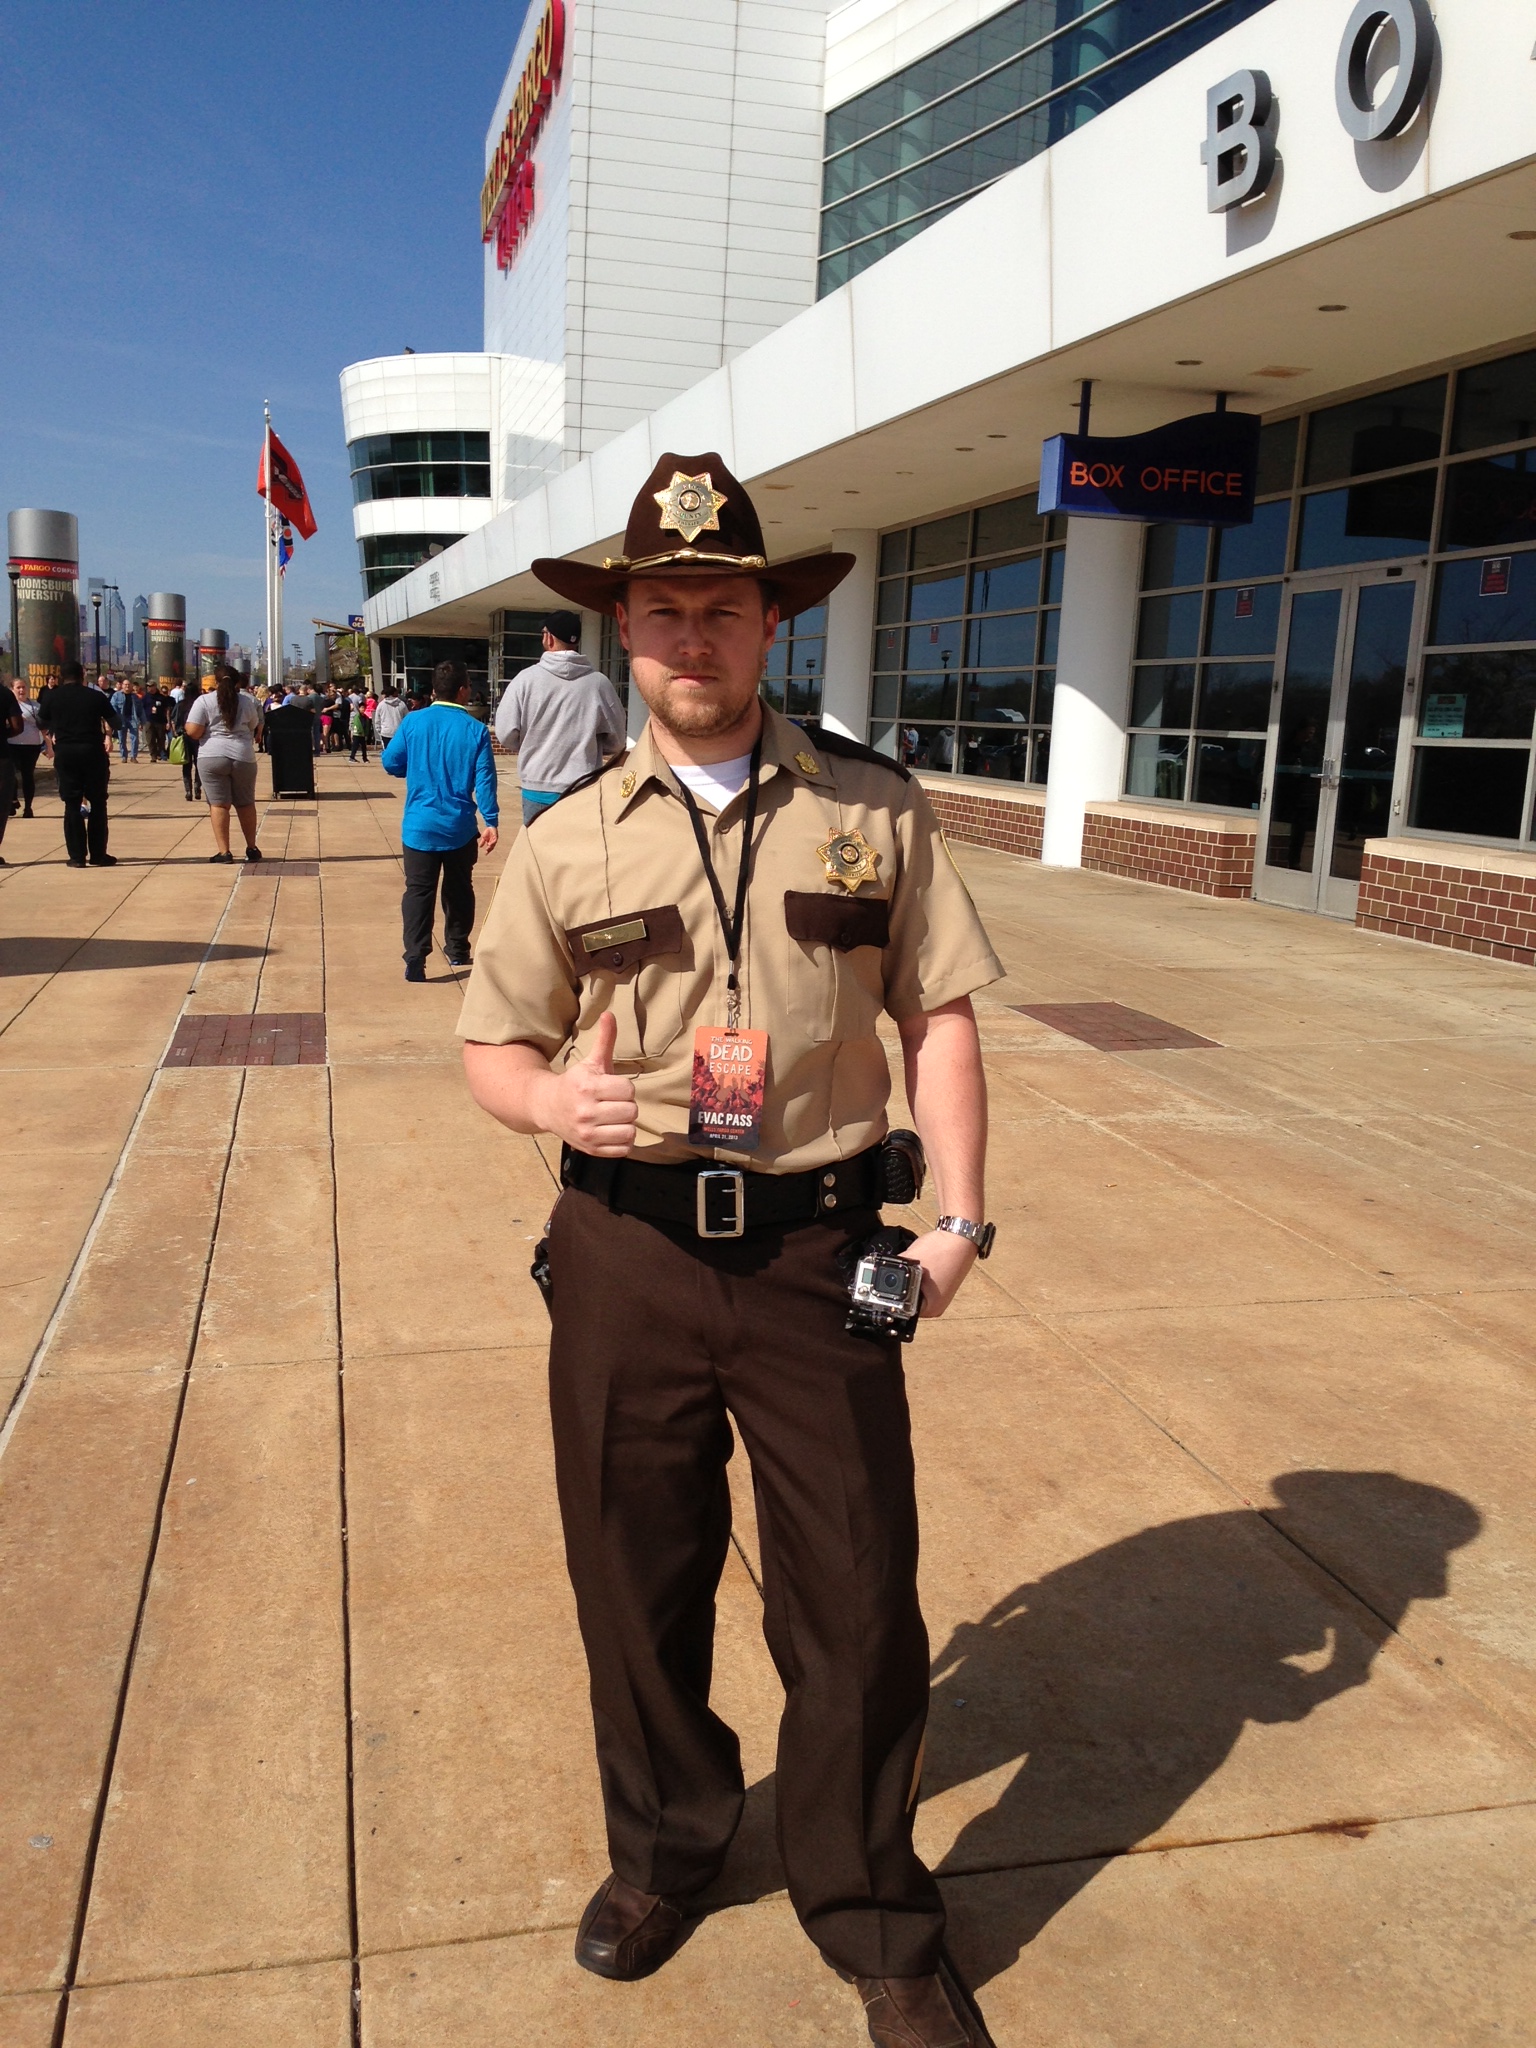 The Walking Dead: Rick Grimes Sheriff Uniform (Season 1) | Page 3 | RPF  Costume and Prop Maker Community